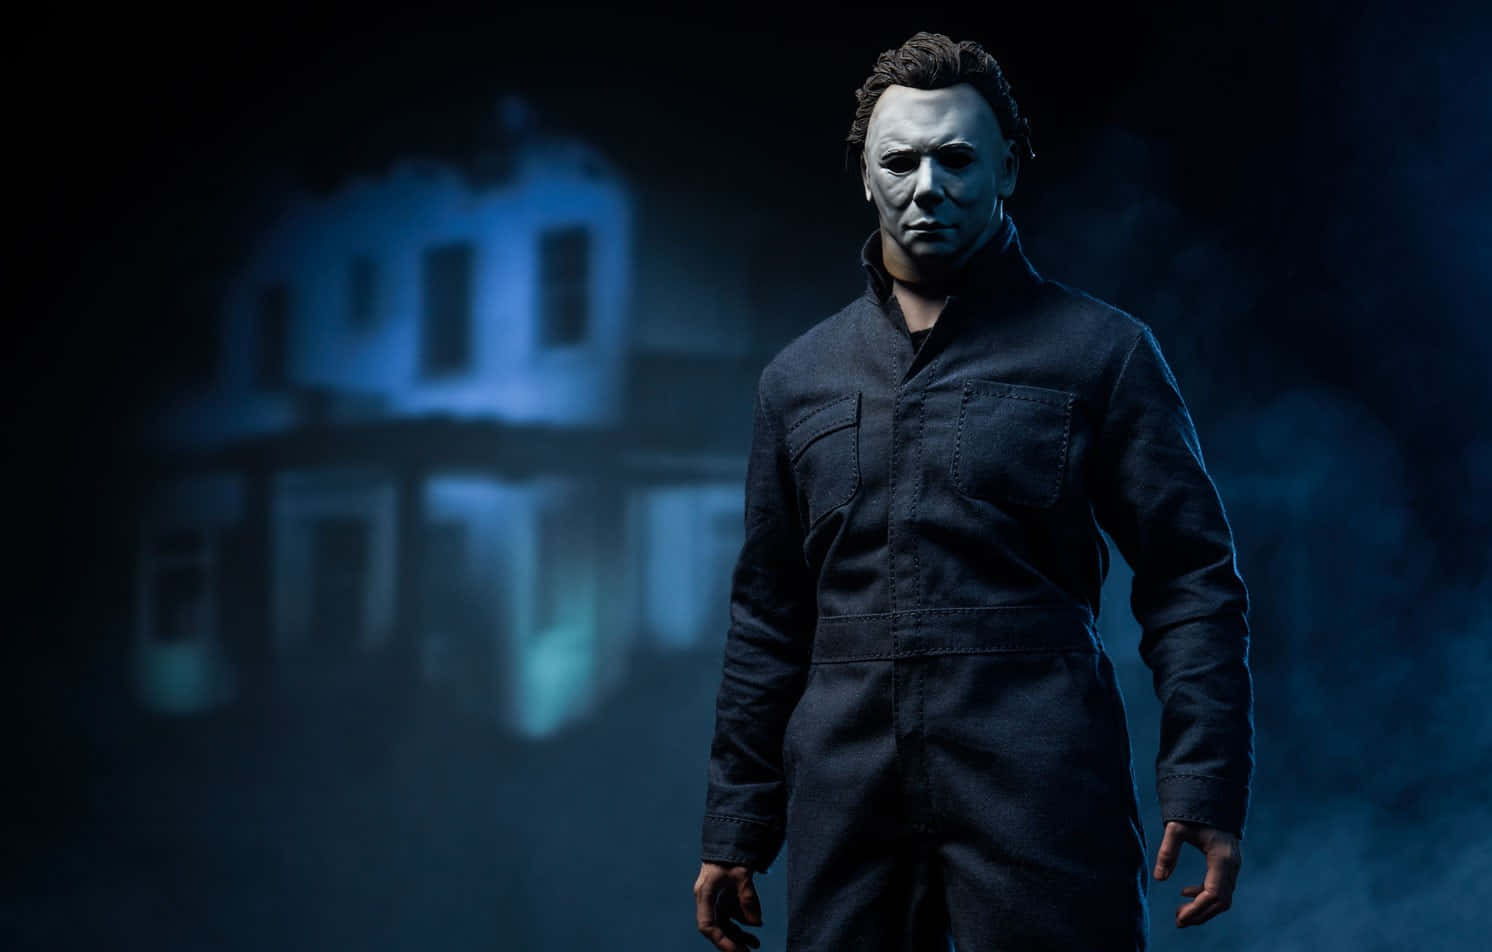 Michael Myers Strikes Fear in Halloween Fans Everywhere